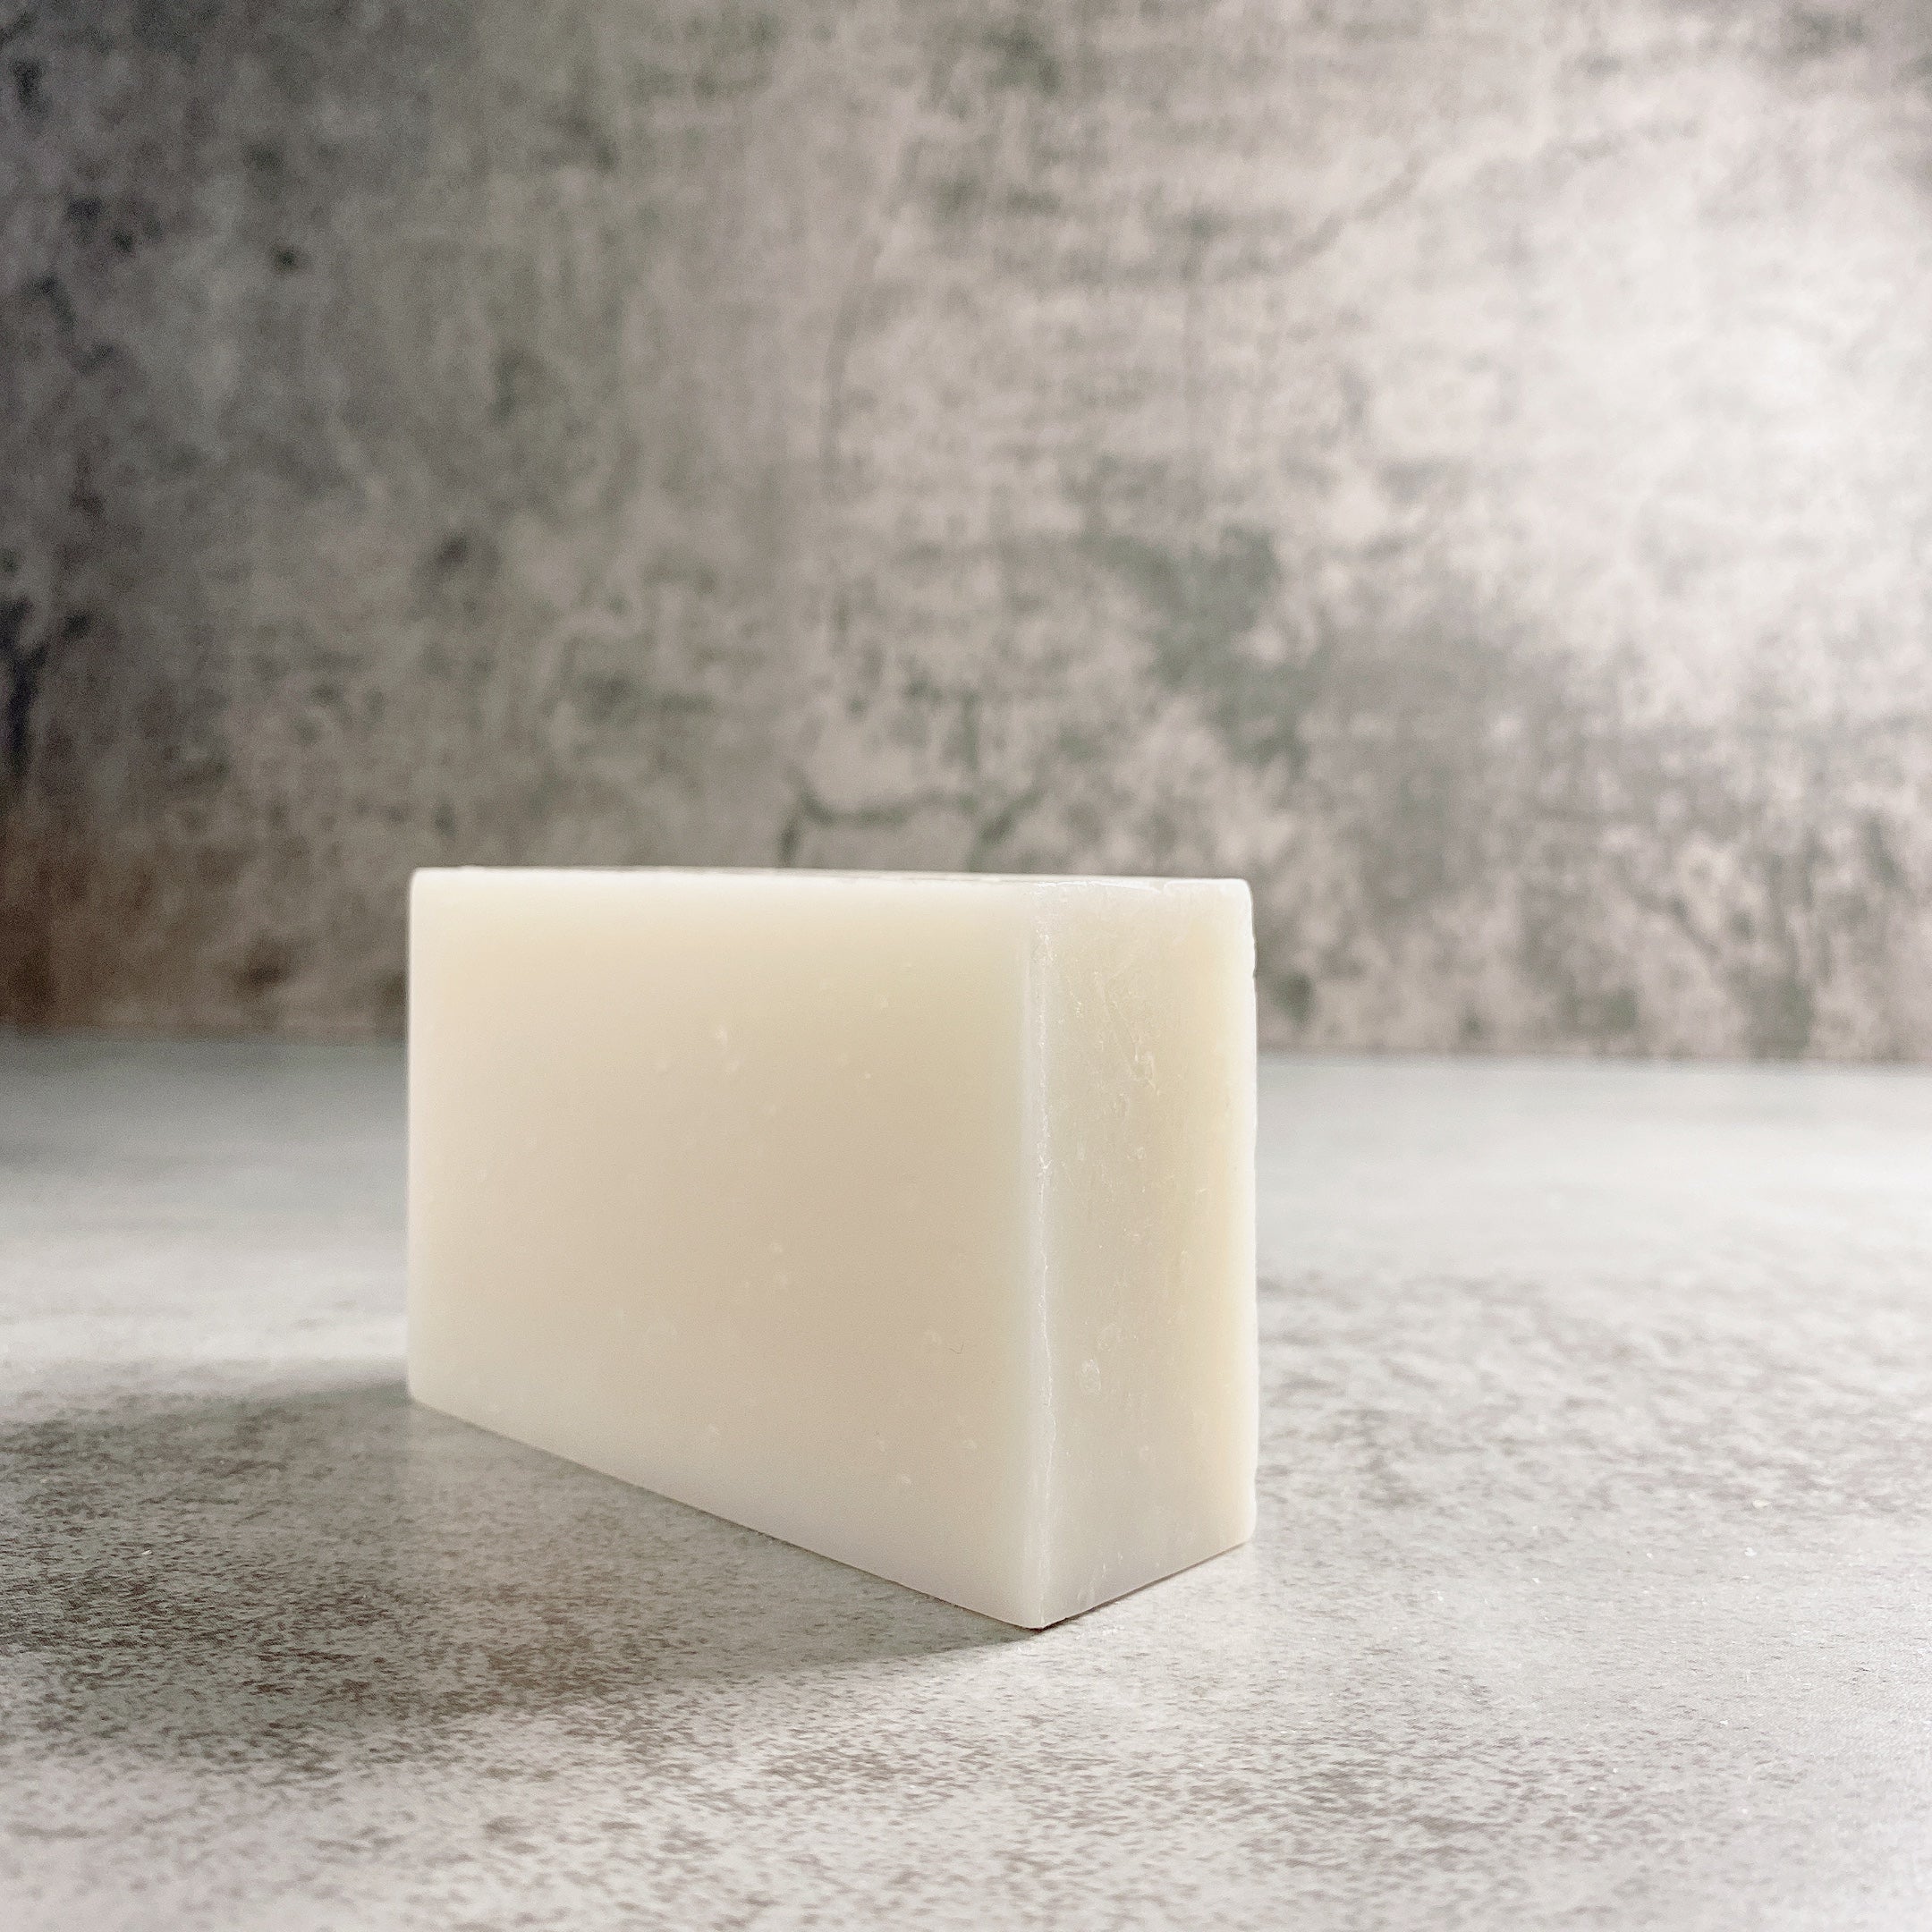 Fragrance Free Bar Soap - Minimal Ethos